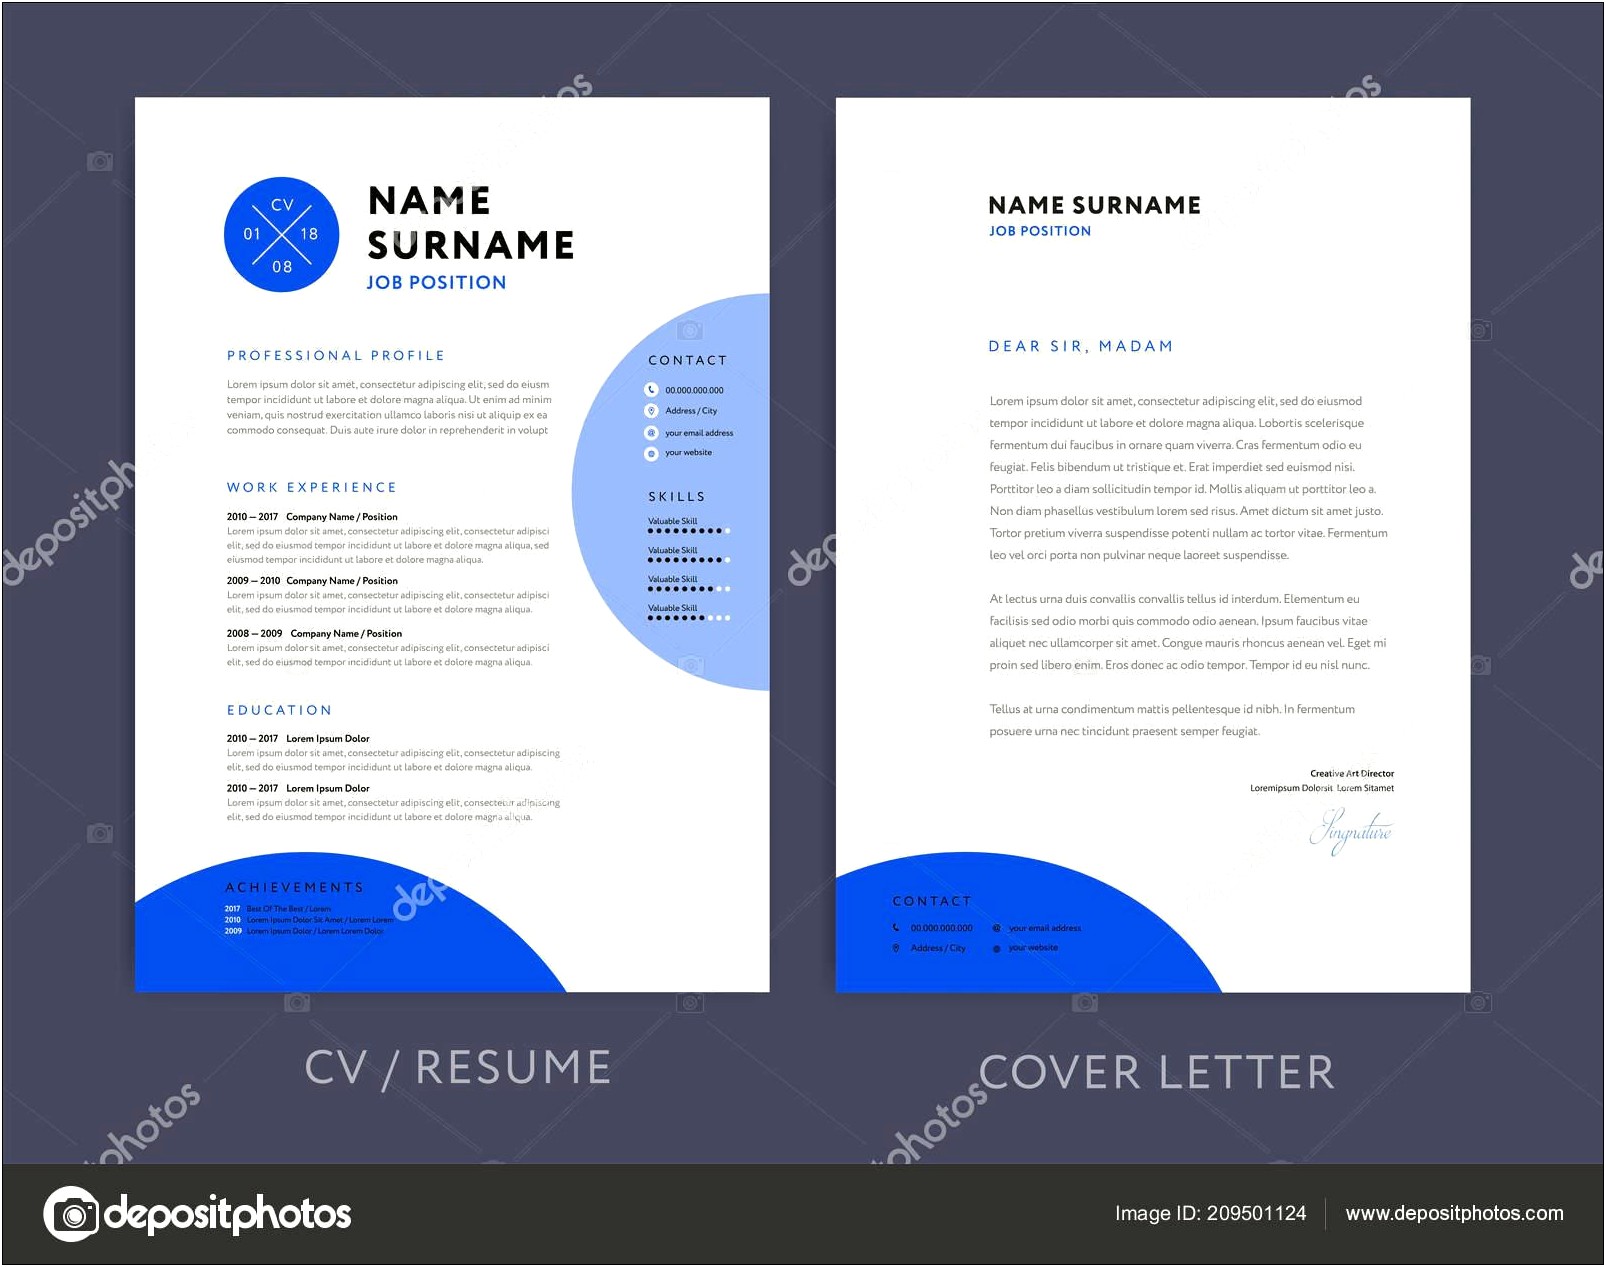 Best Cover Letter Format For Resume 2017